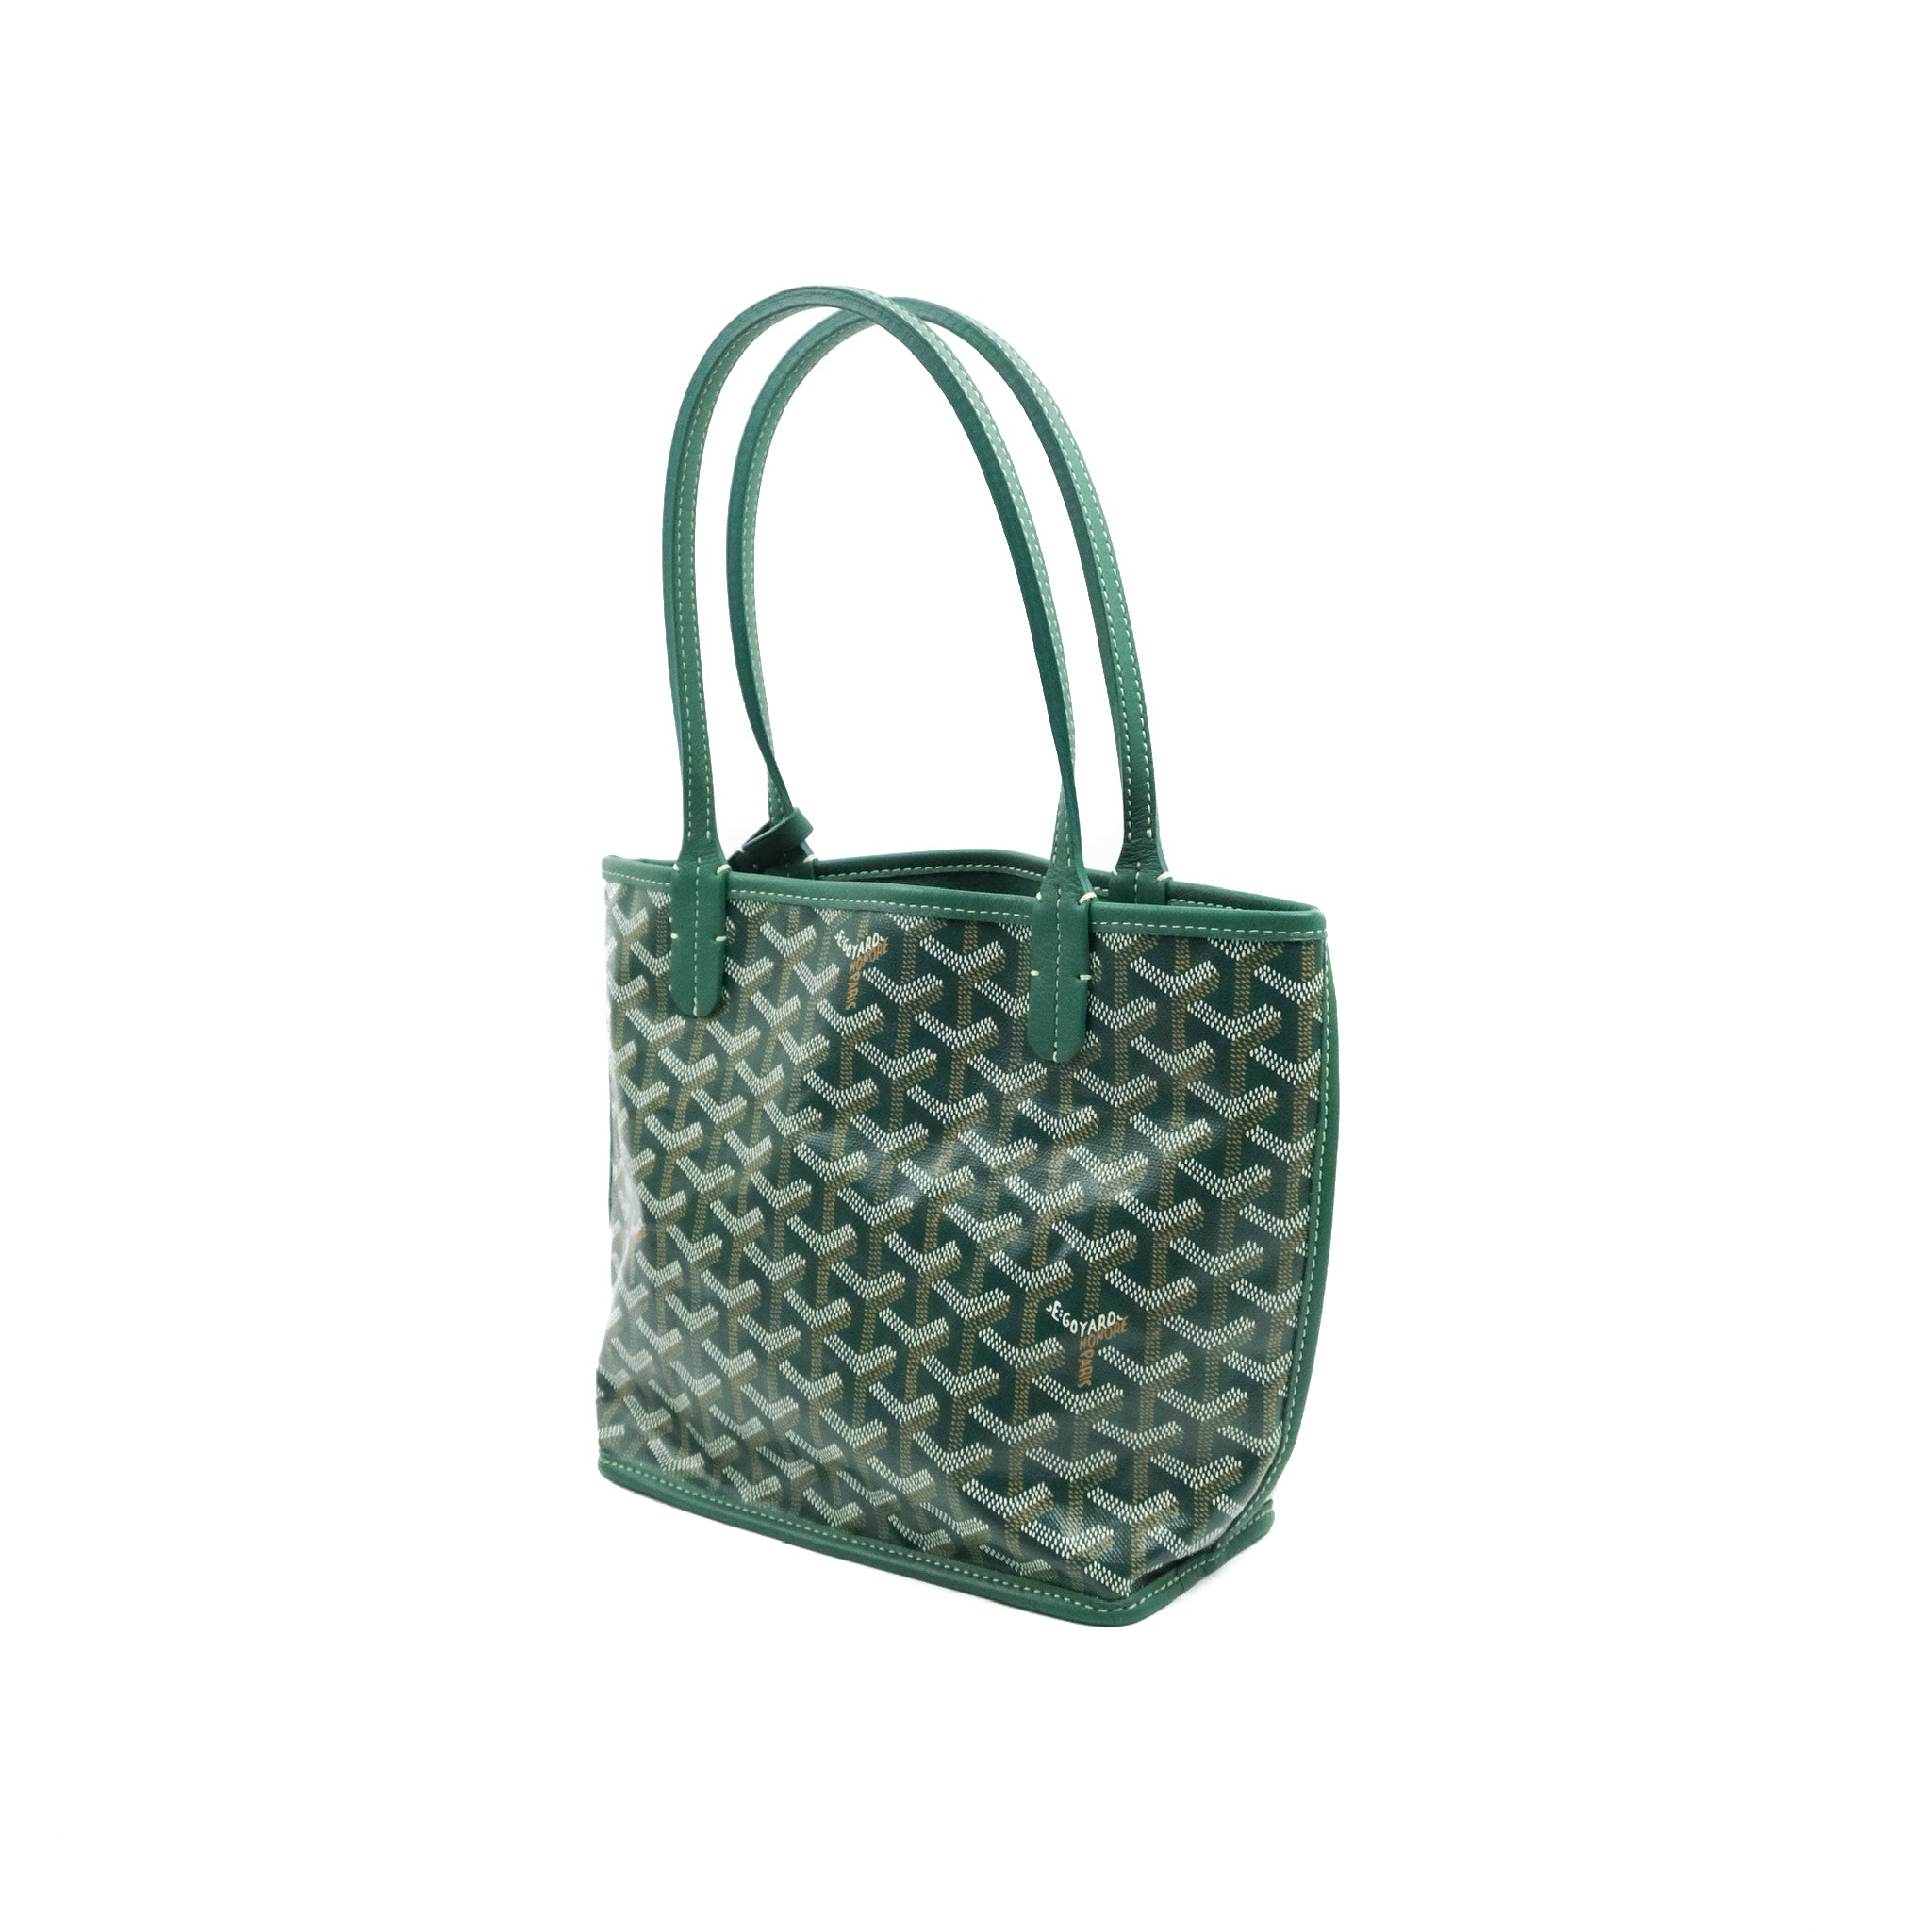 Goyard Bags & Handbags for Women, Authenticity Guaranteed